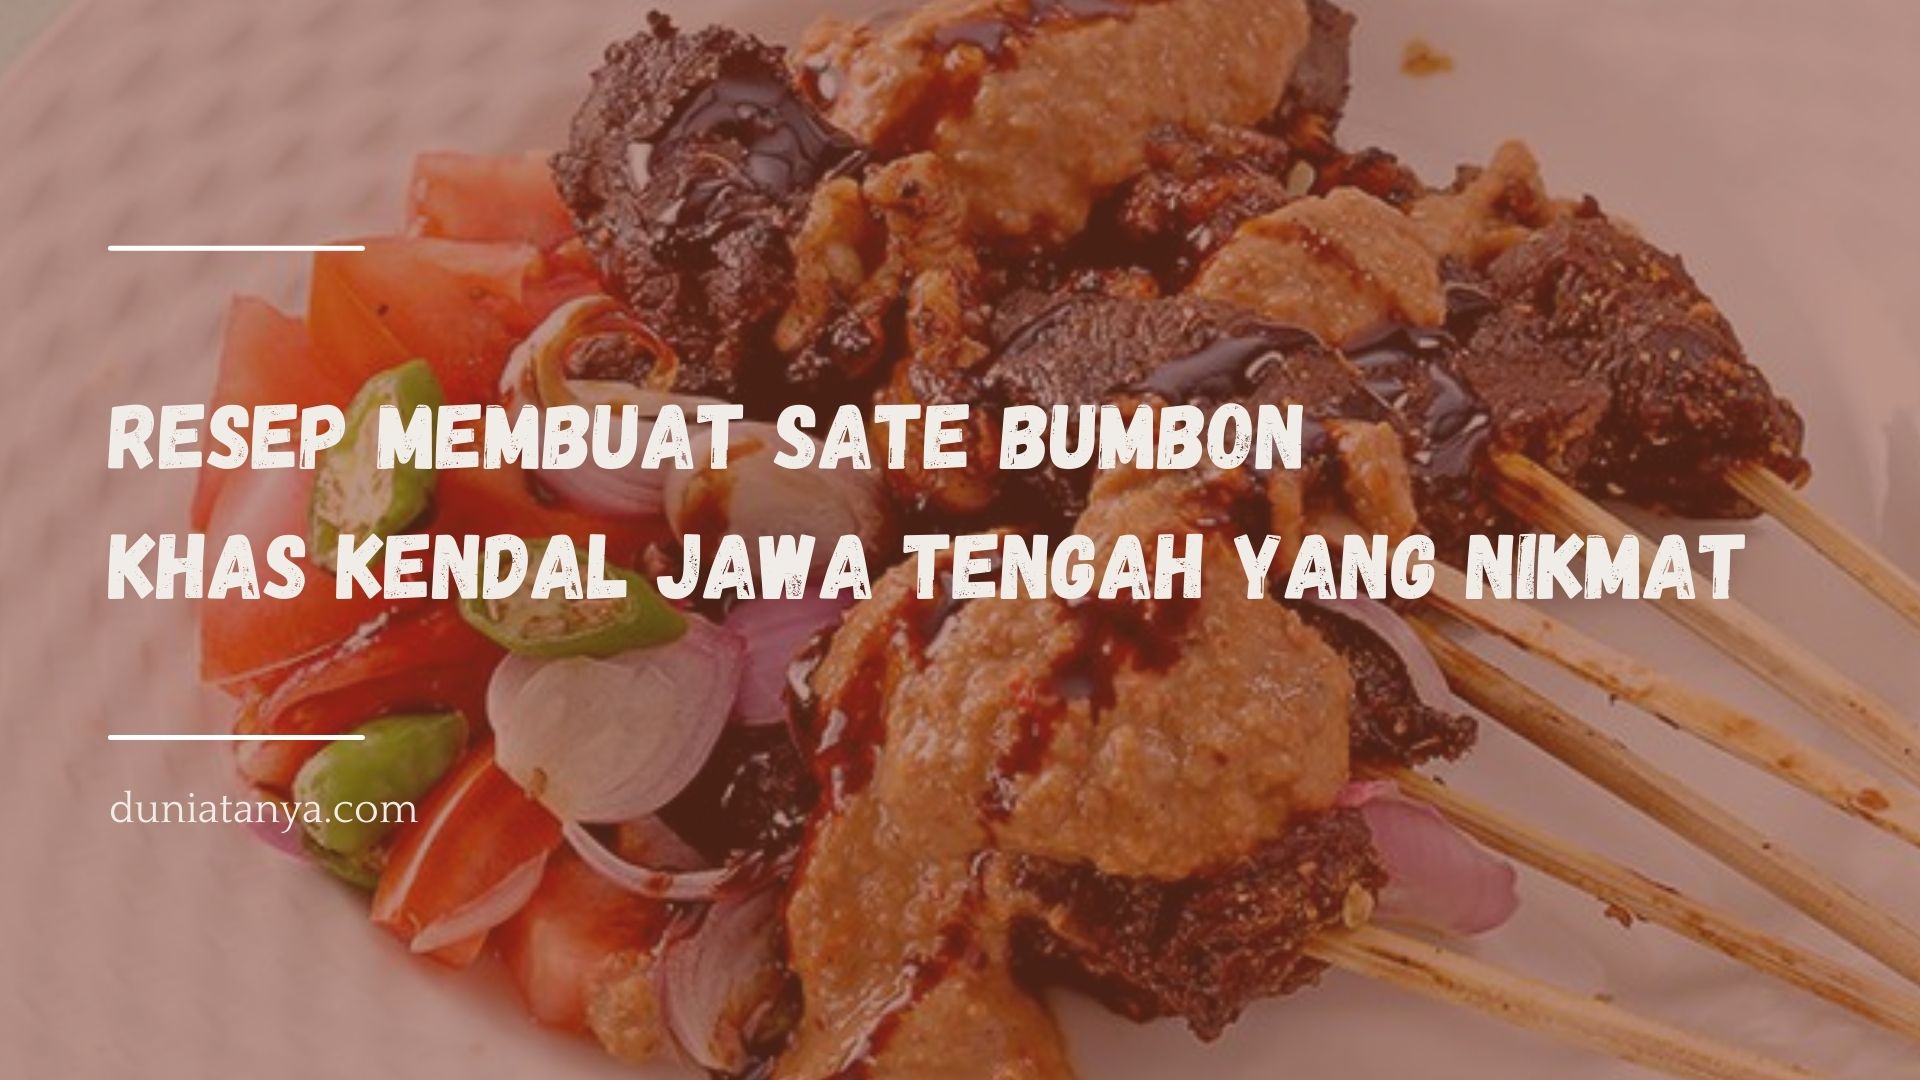 You are currently viewing Resep Membuat Sate Bumbon Khas Kendal Jawa Tengah Yang Nikmat